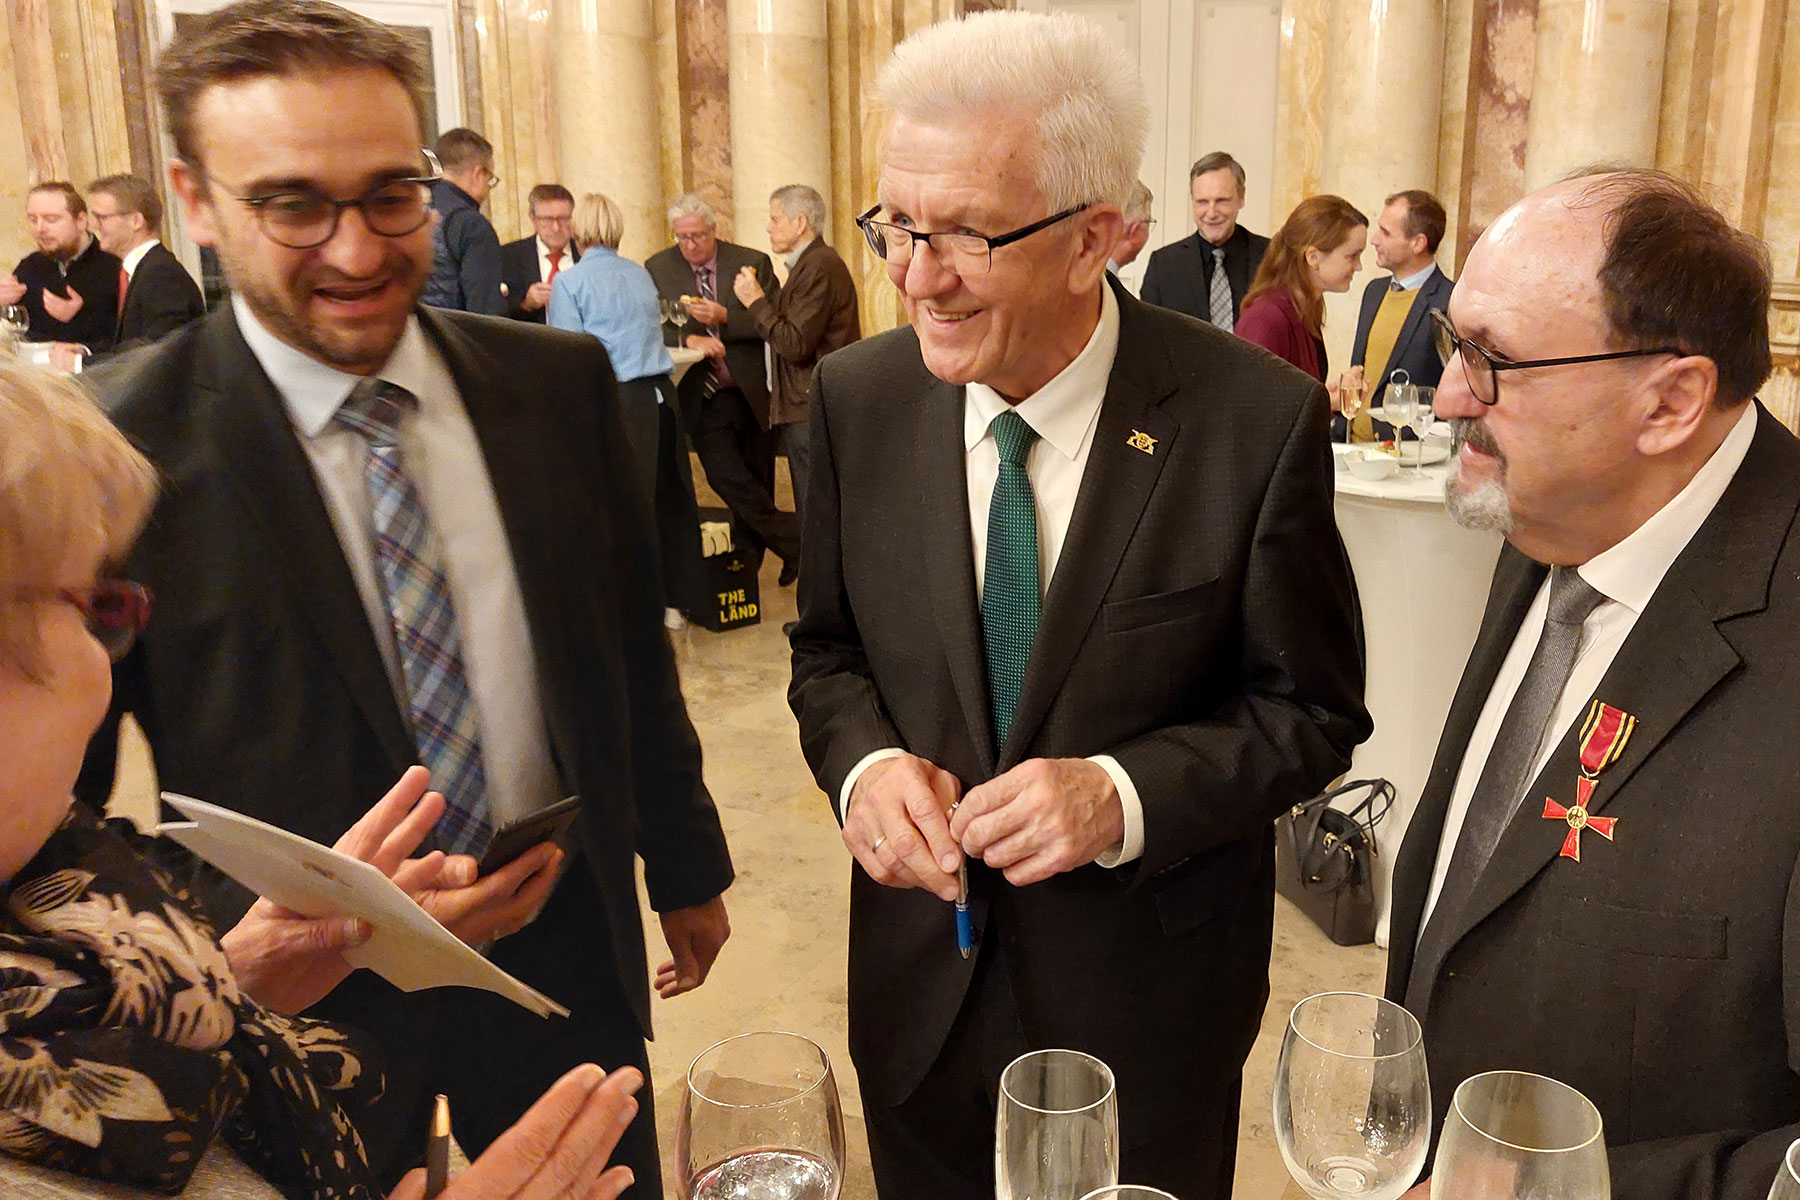 Die Familie Ritter im Gespräch mit Ministerpräsident Winfried Kretschmann